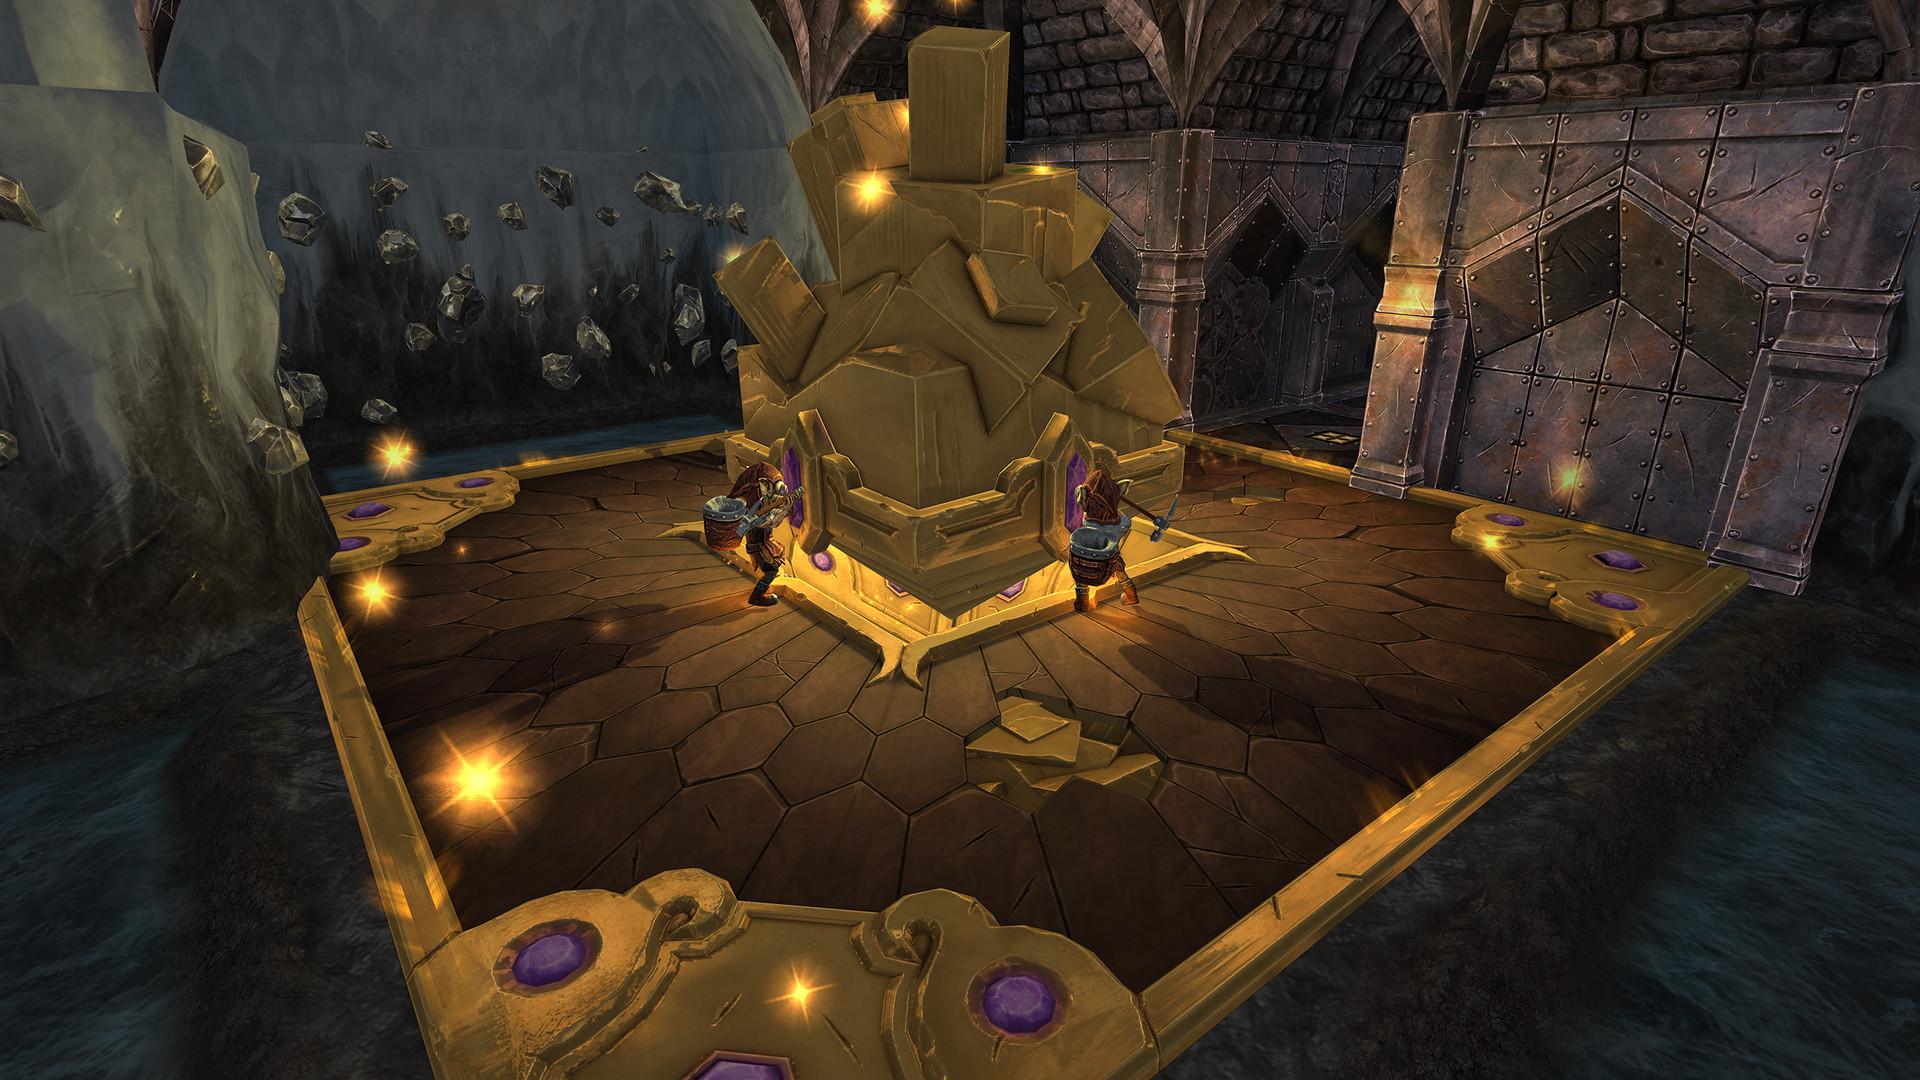 Screenshot №6 from game War for the Overworld